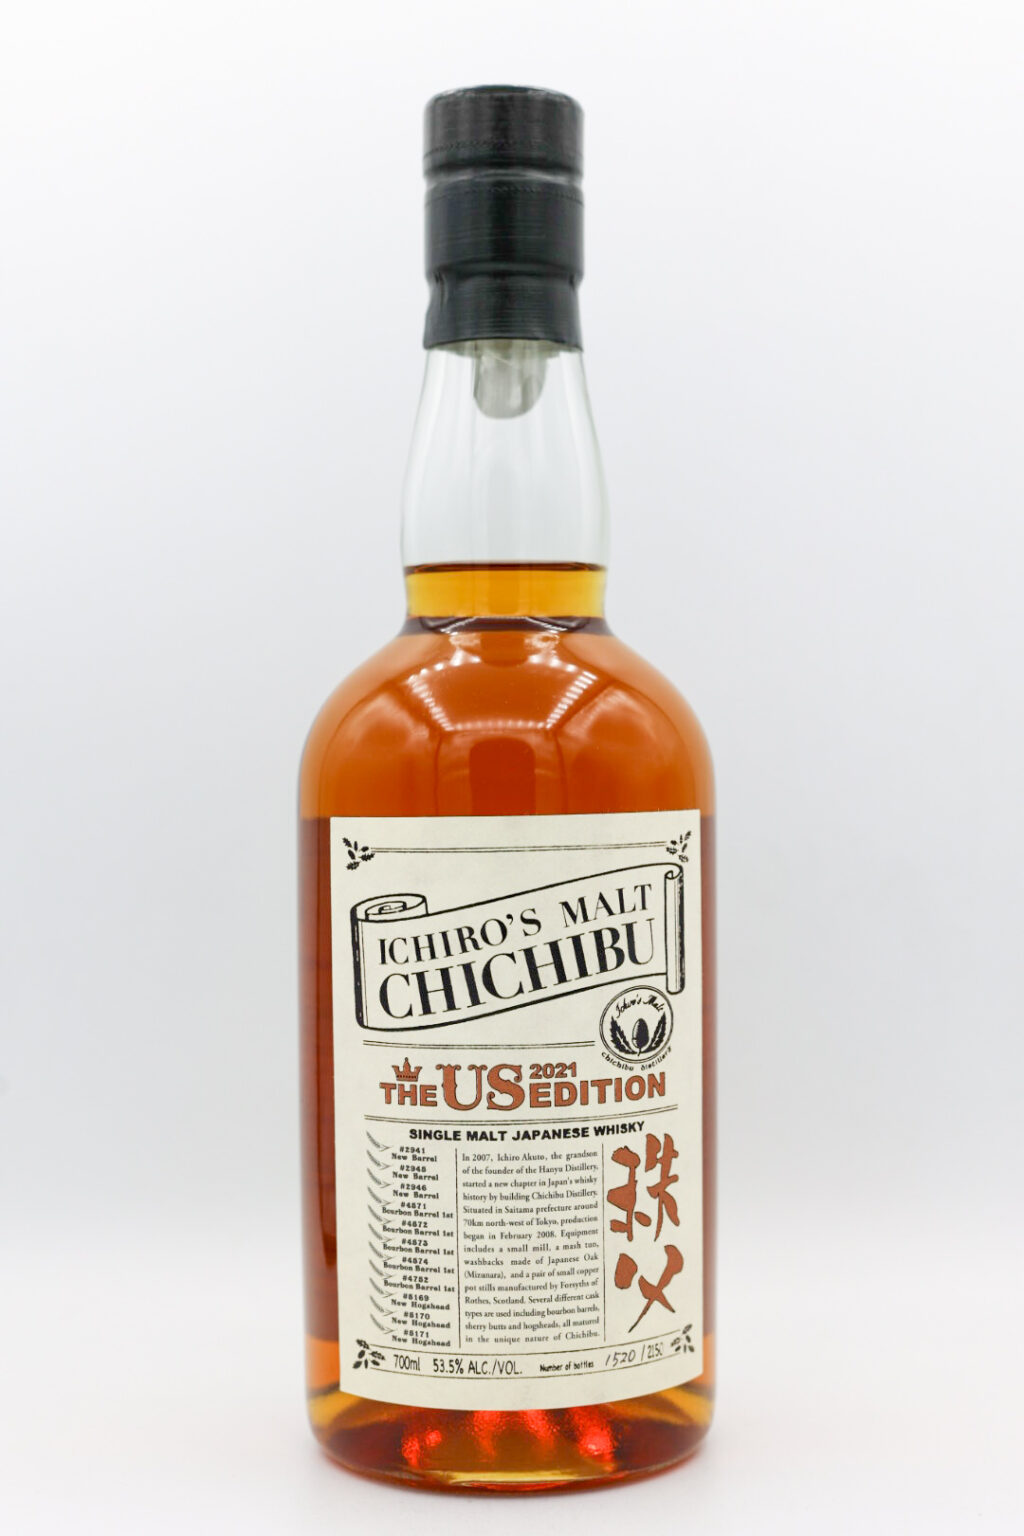 Chichibu Ichiro’s Malt “US 2021 Edition”” Single Malt Japanese Whisky”